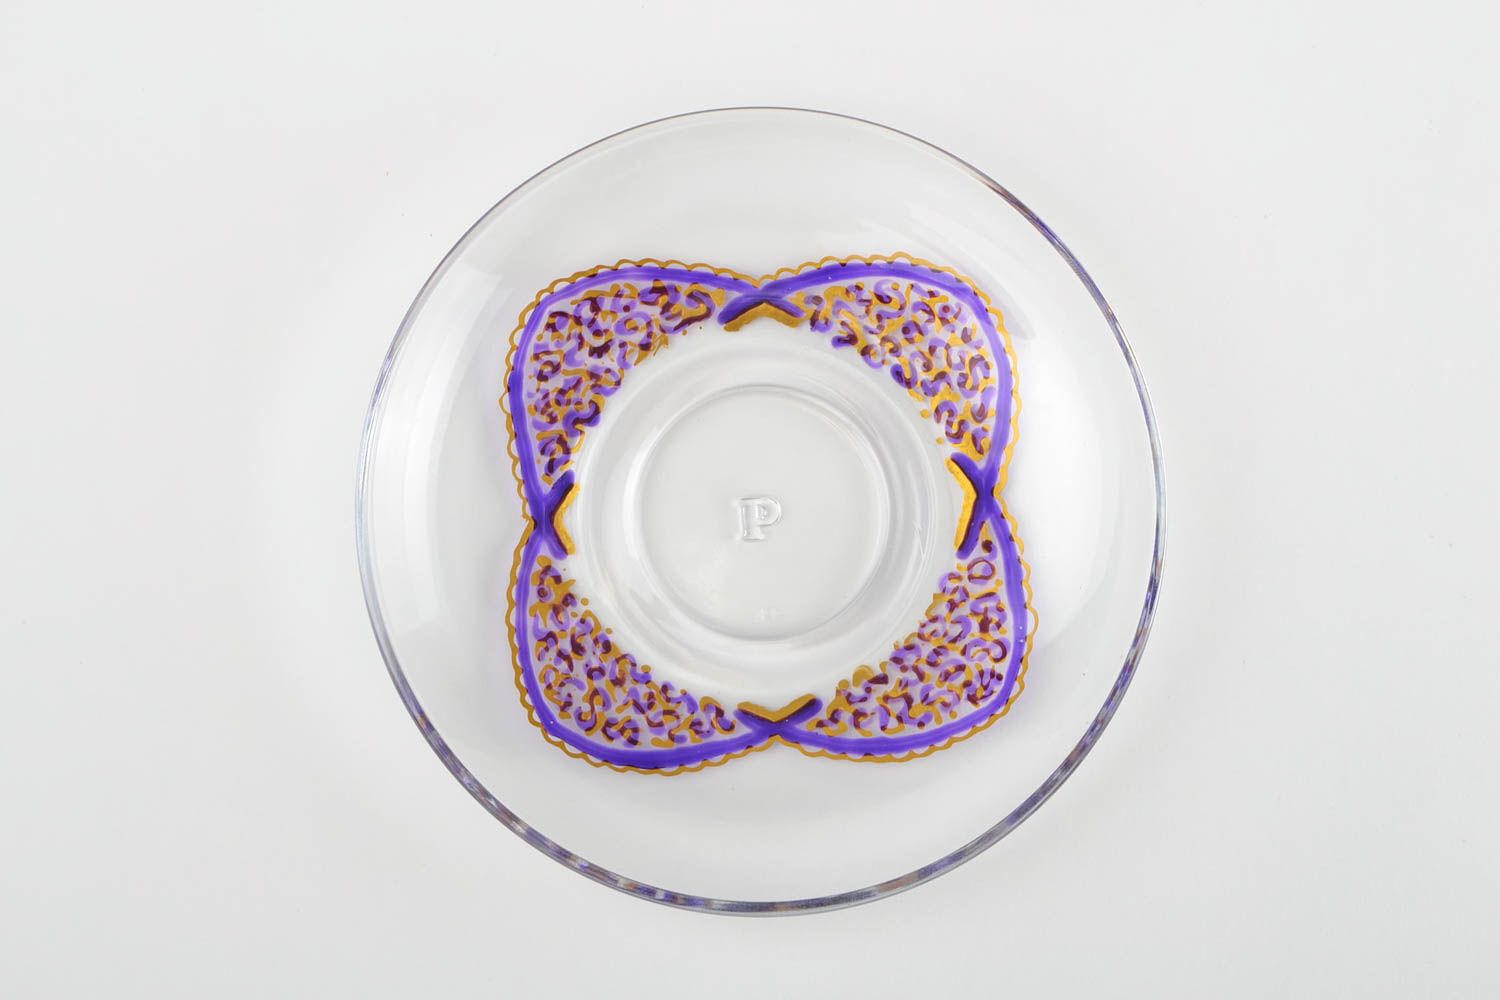 Handmade saucer stained glass saucer glass tableware interior decor ideas photo 1